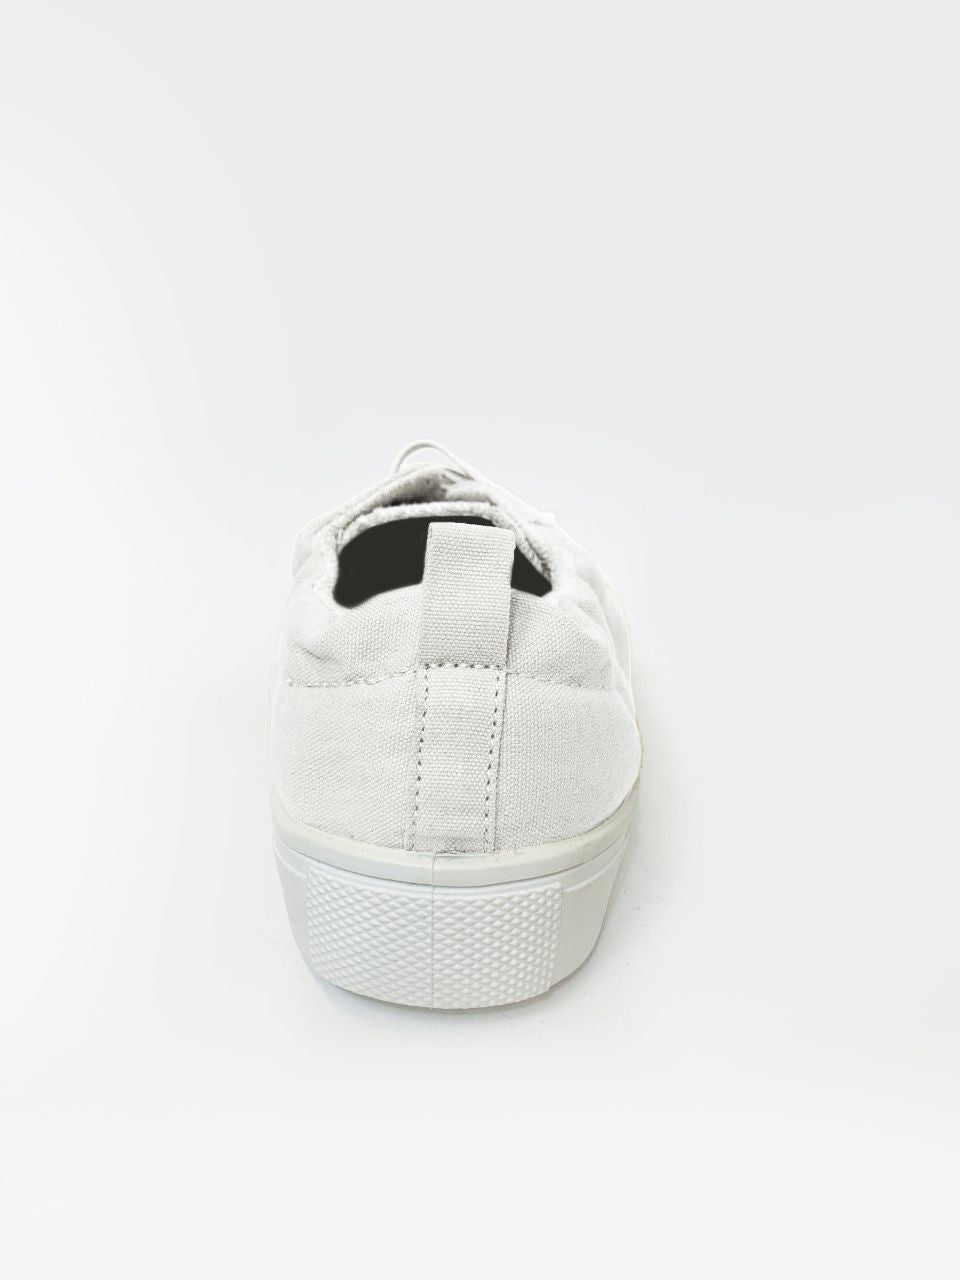 Betty Basics - Retro Sneaker - White/Gold